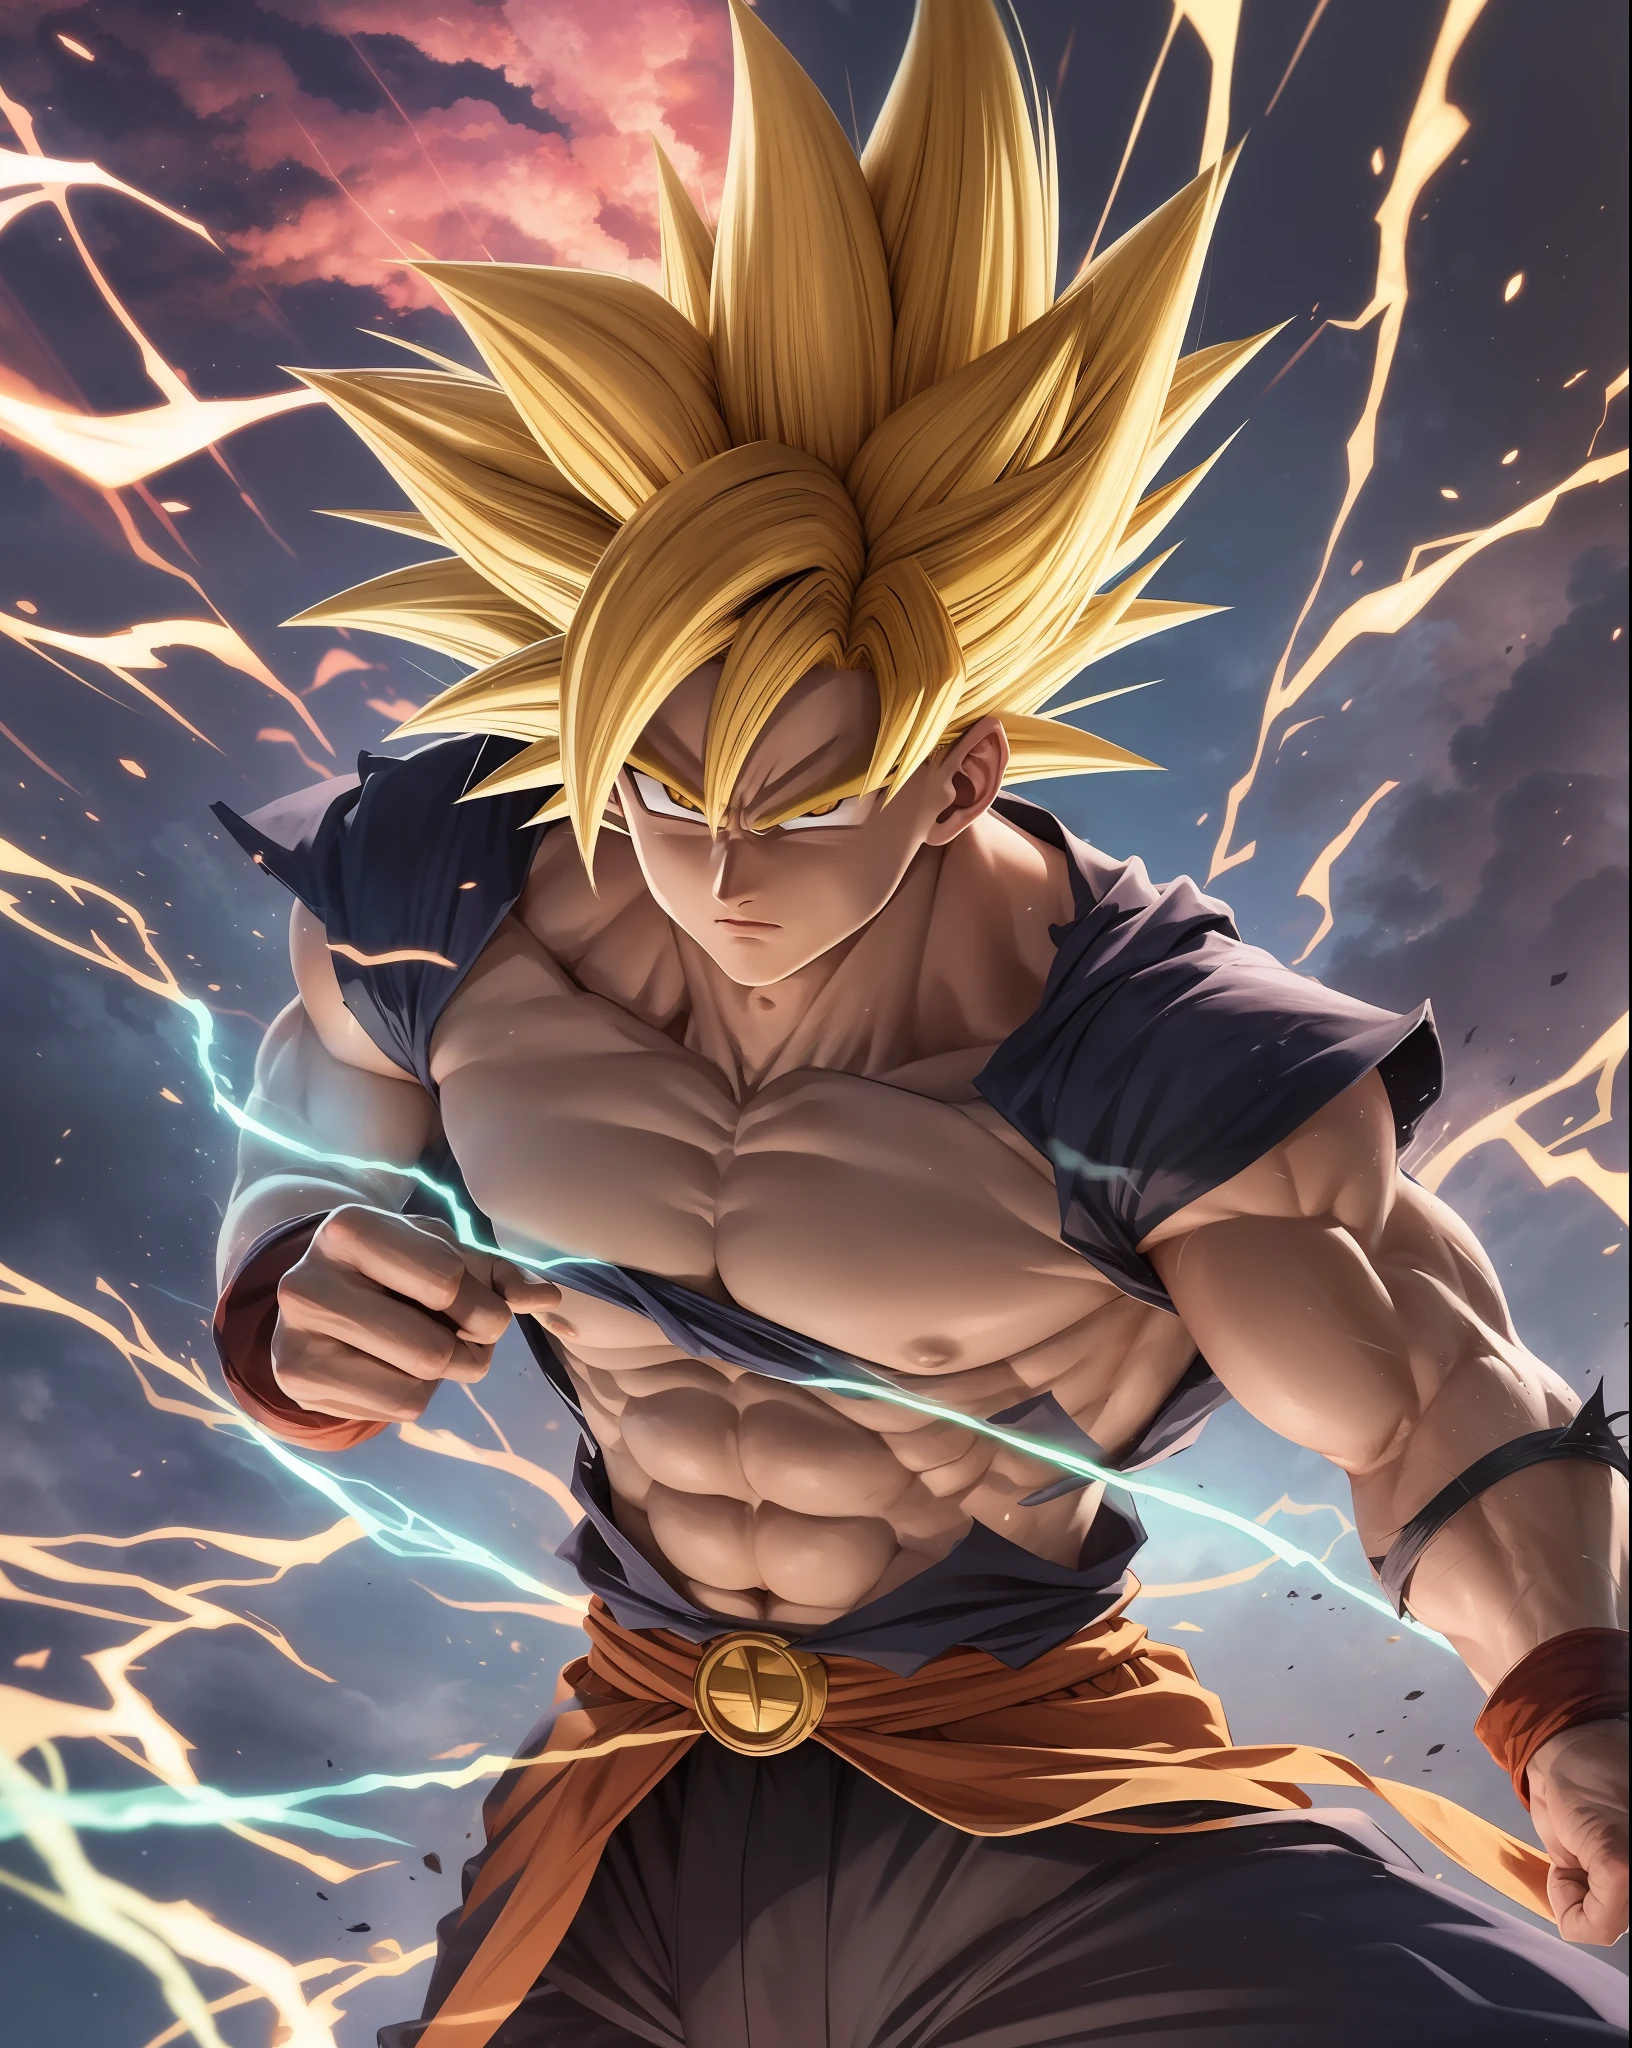 Goku super Sayajin 4, red coat, rabo, energy leaving the body, hair flying with energy rays, fire hair, Amazing image, anime styling